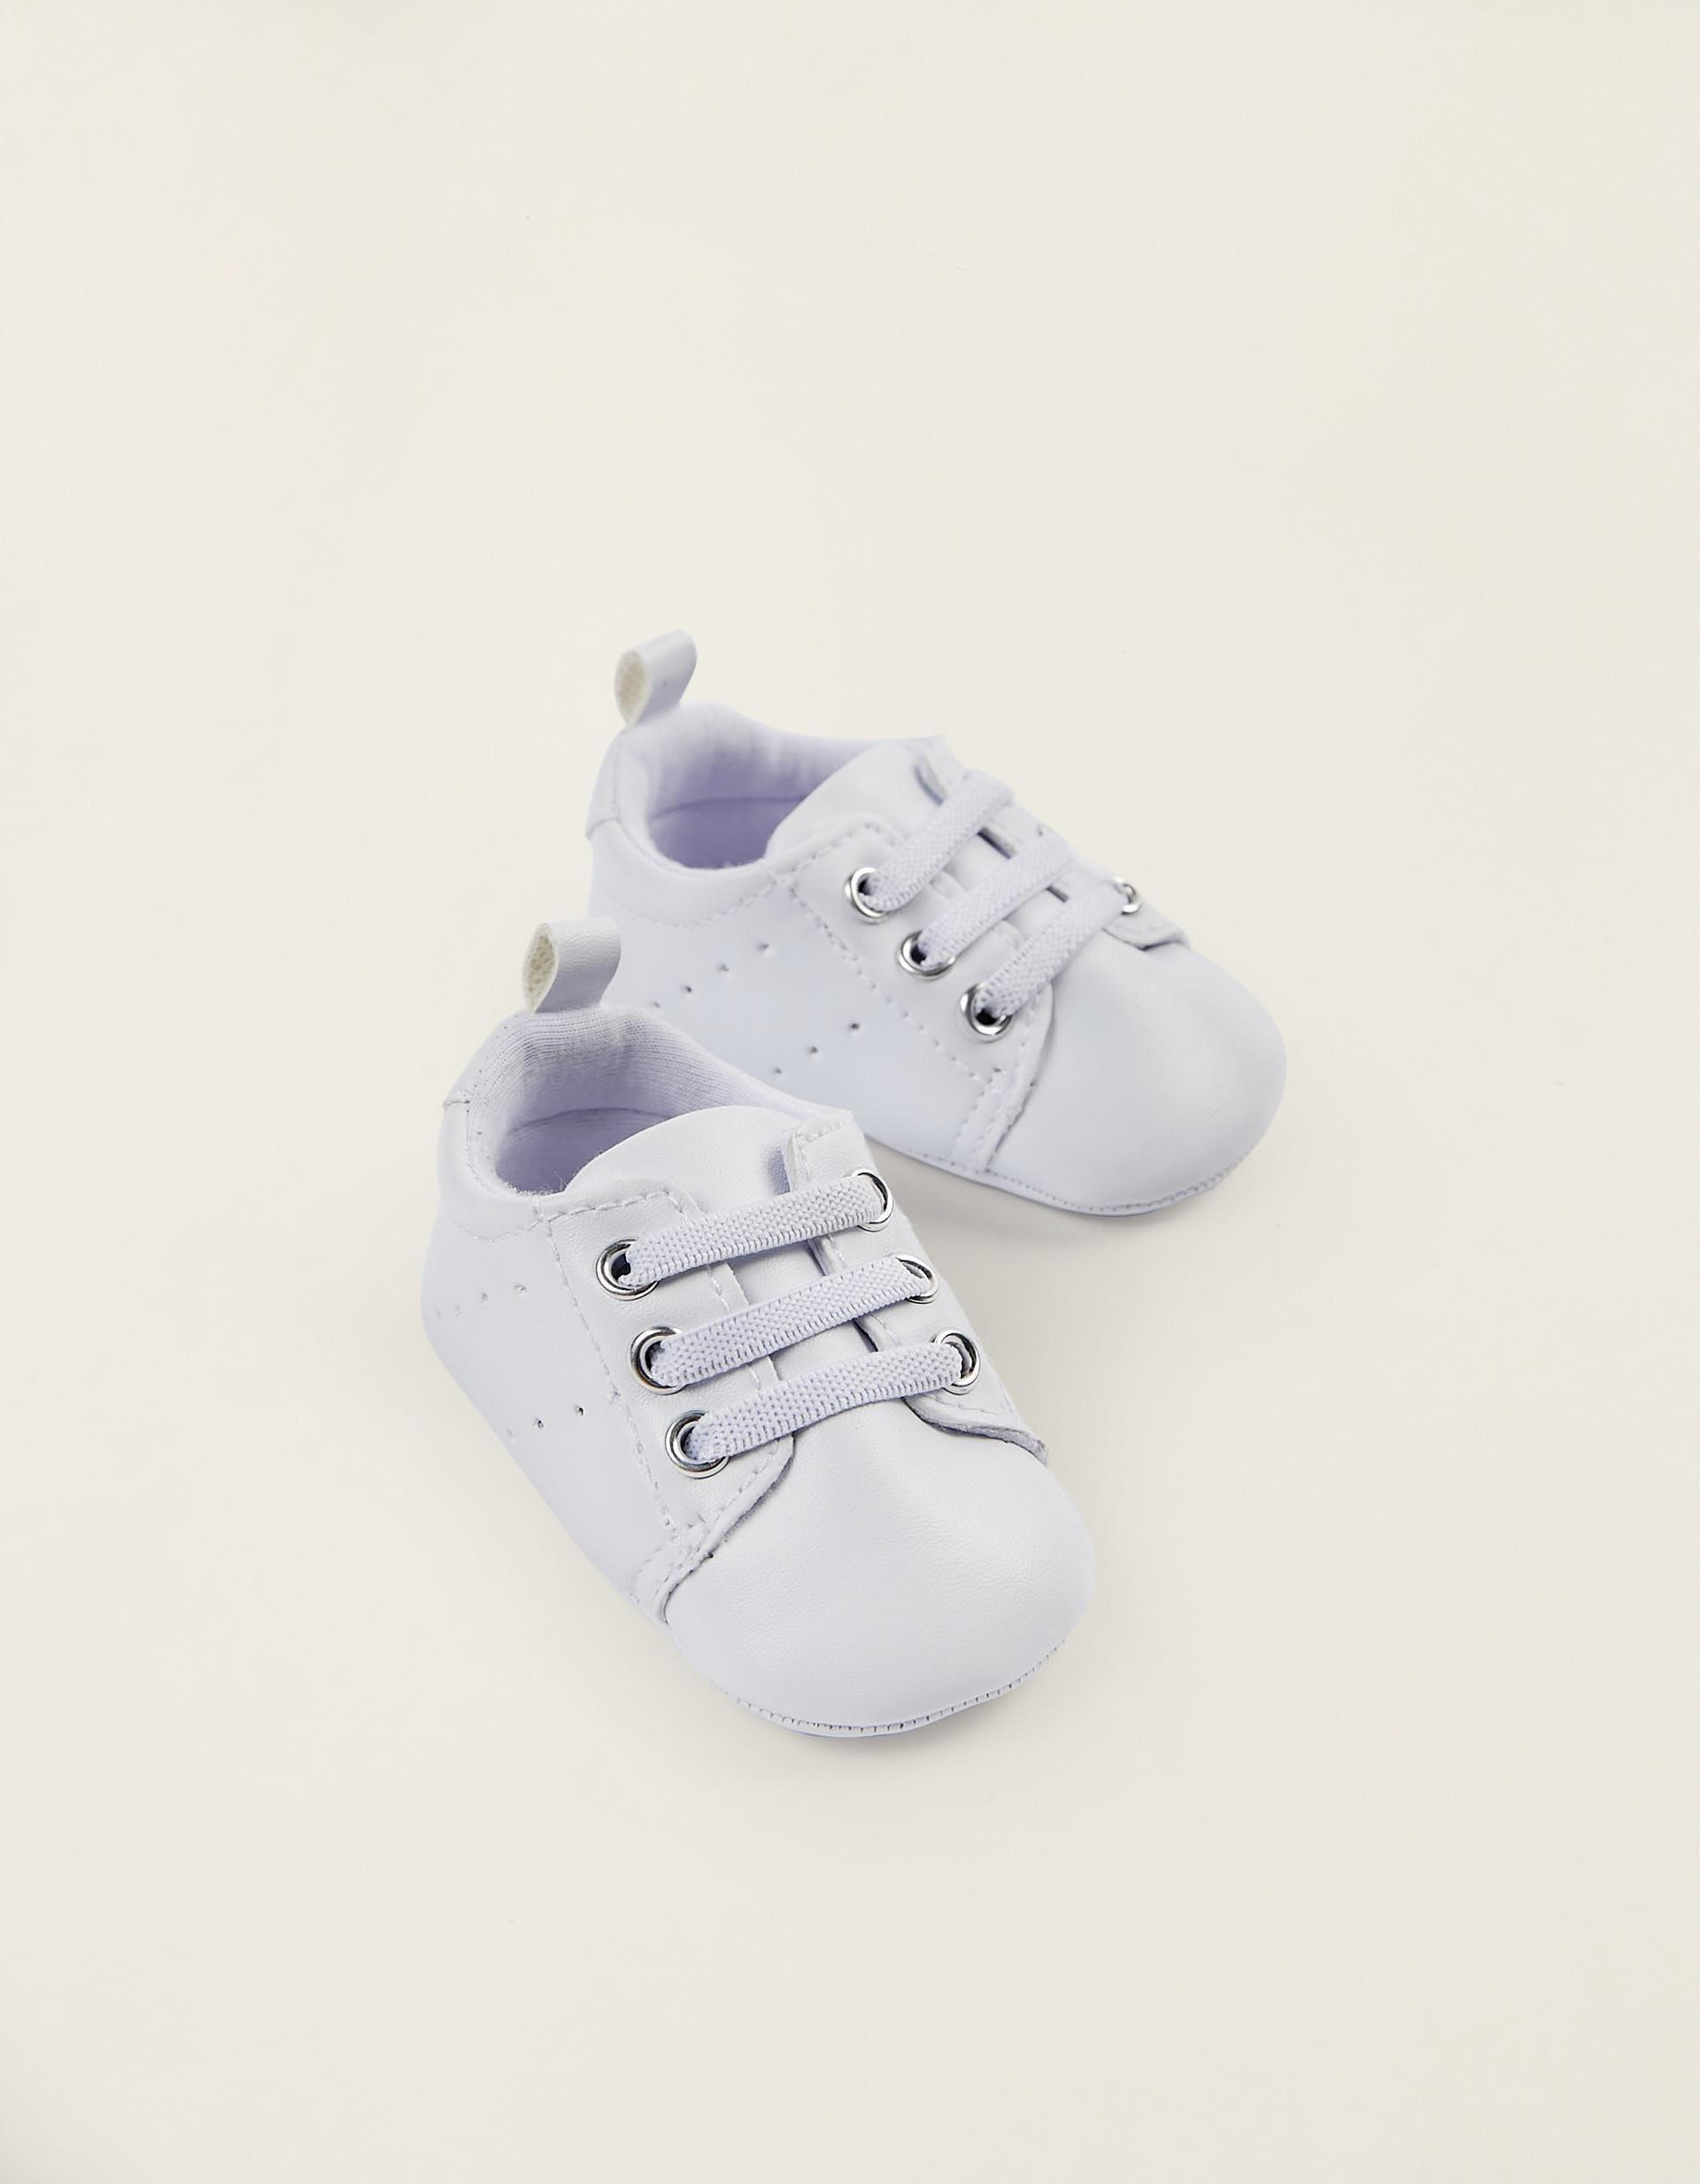 Zippy - White Detailed Shoes, Baby Boys